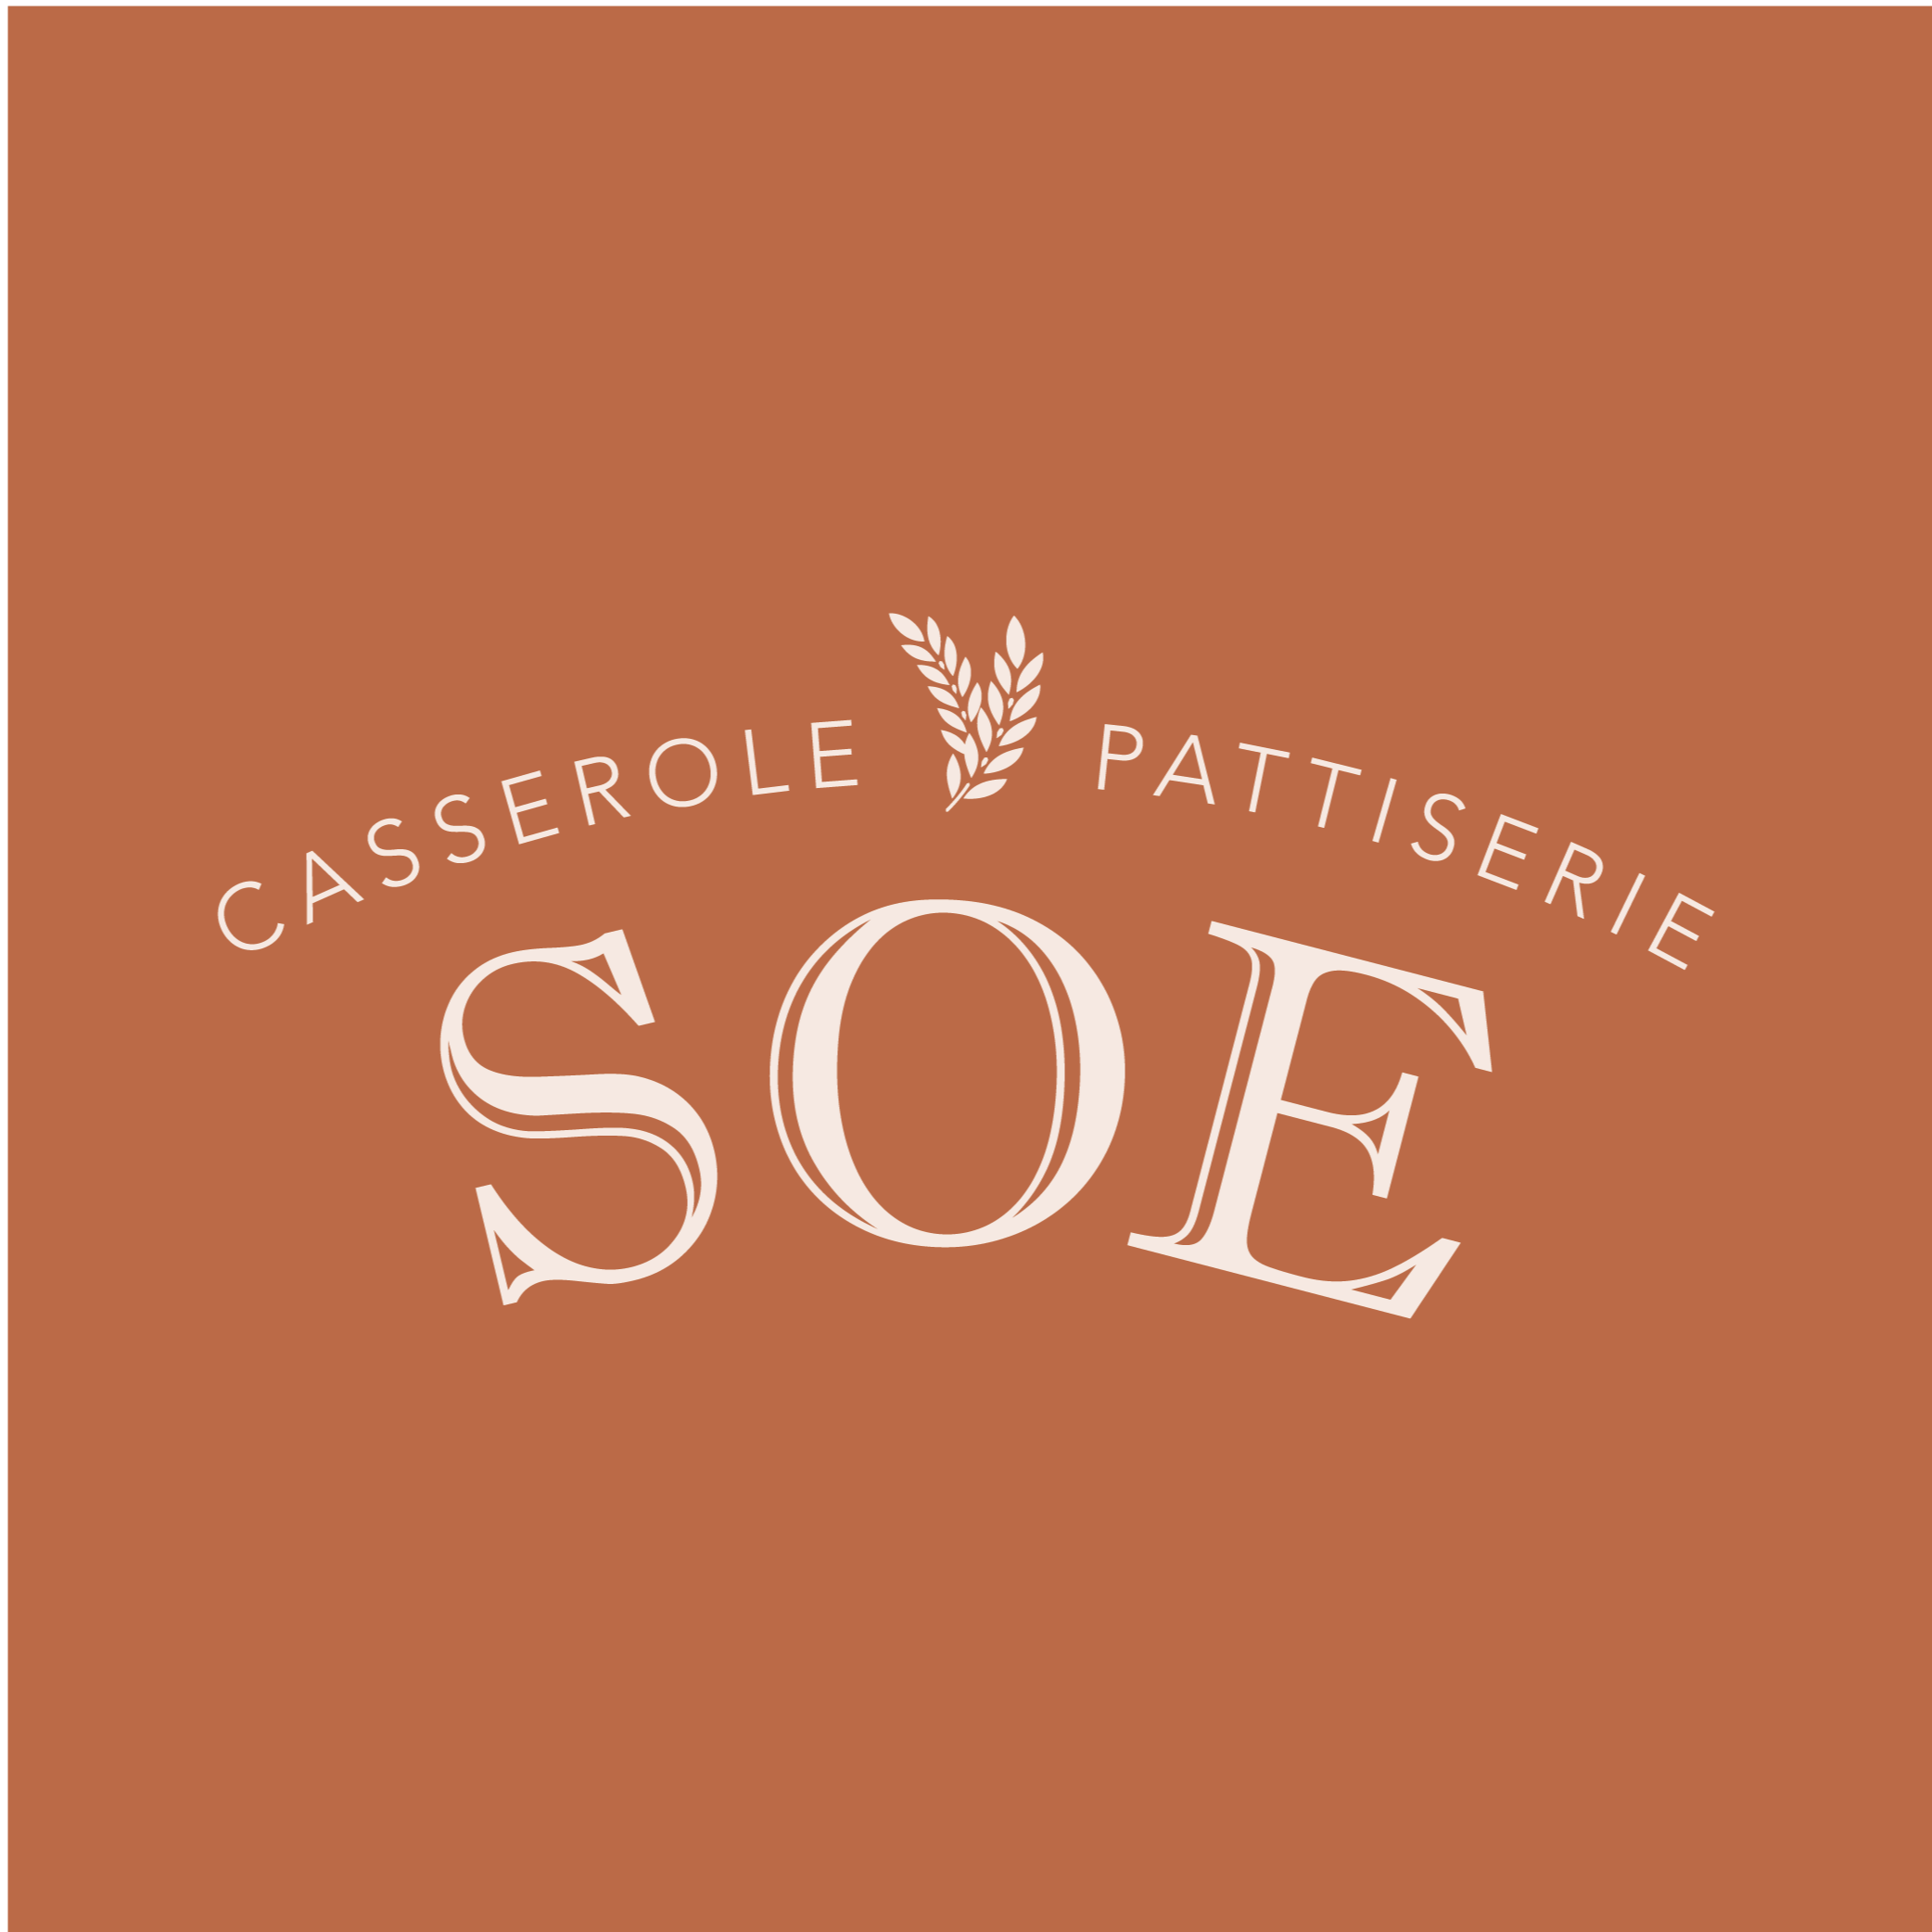 Soe's Casserole and Patisserie